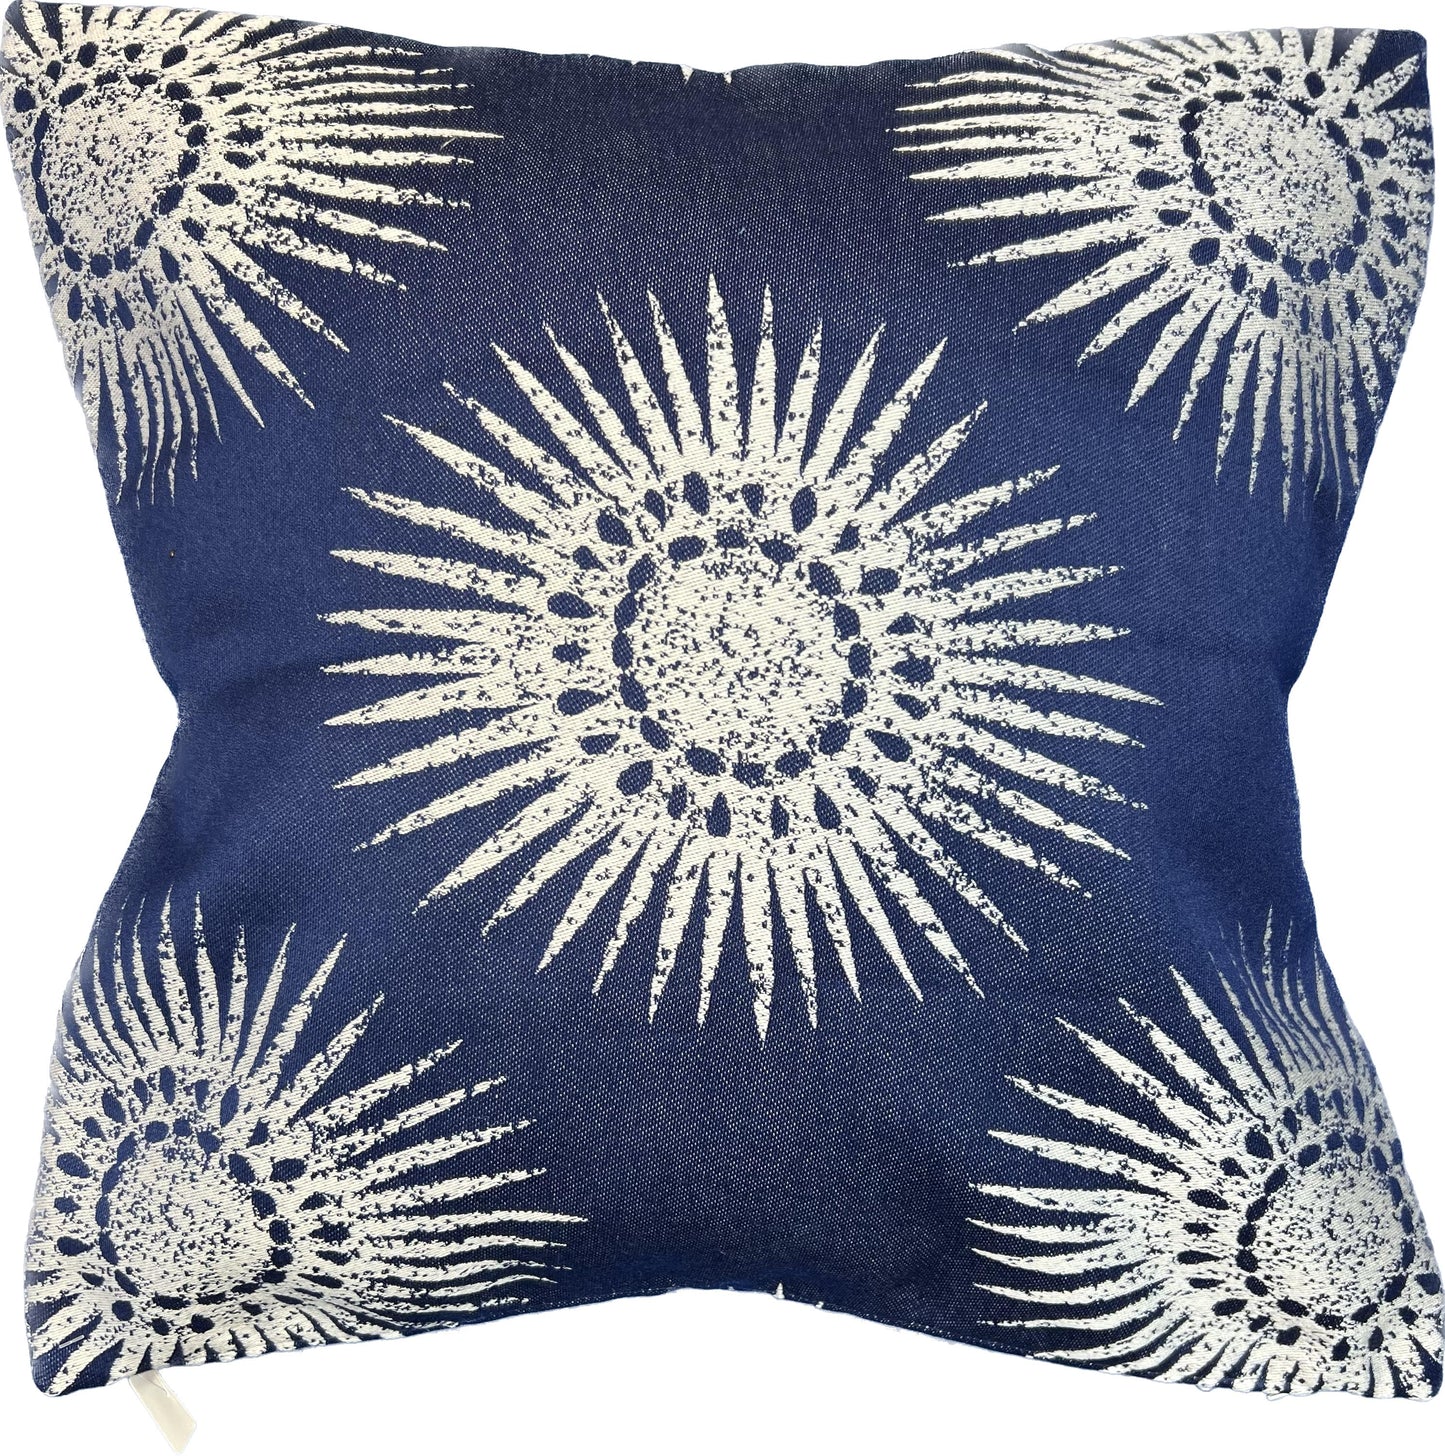 20"x20" Solstice Pillow Cover (Thibaut - Sunbrella: W80781 Bahia Woven - Navy)